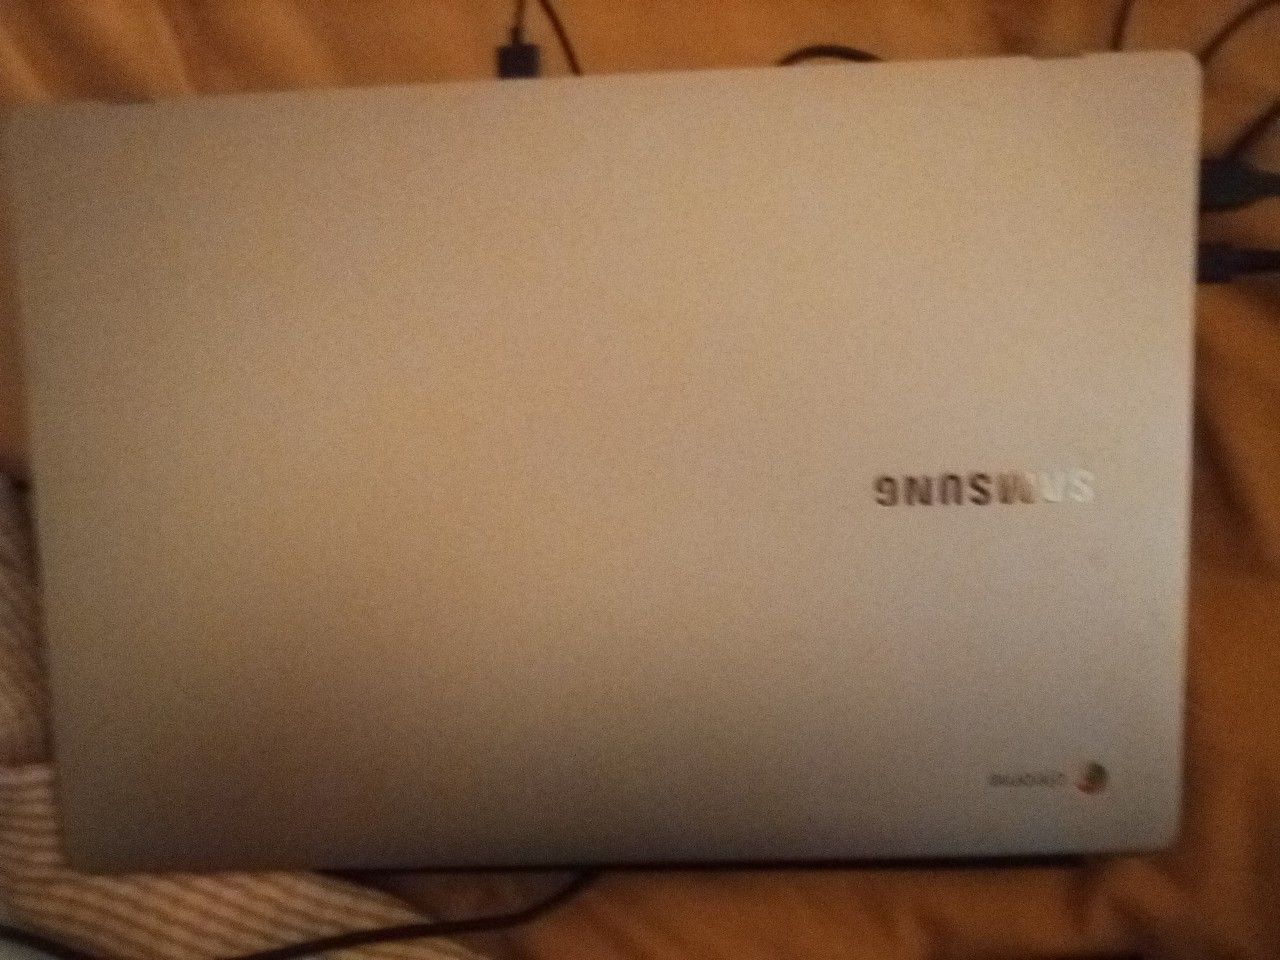 Samsung 15.5 inch chromebook